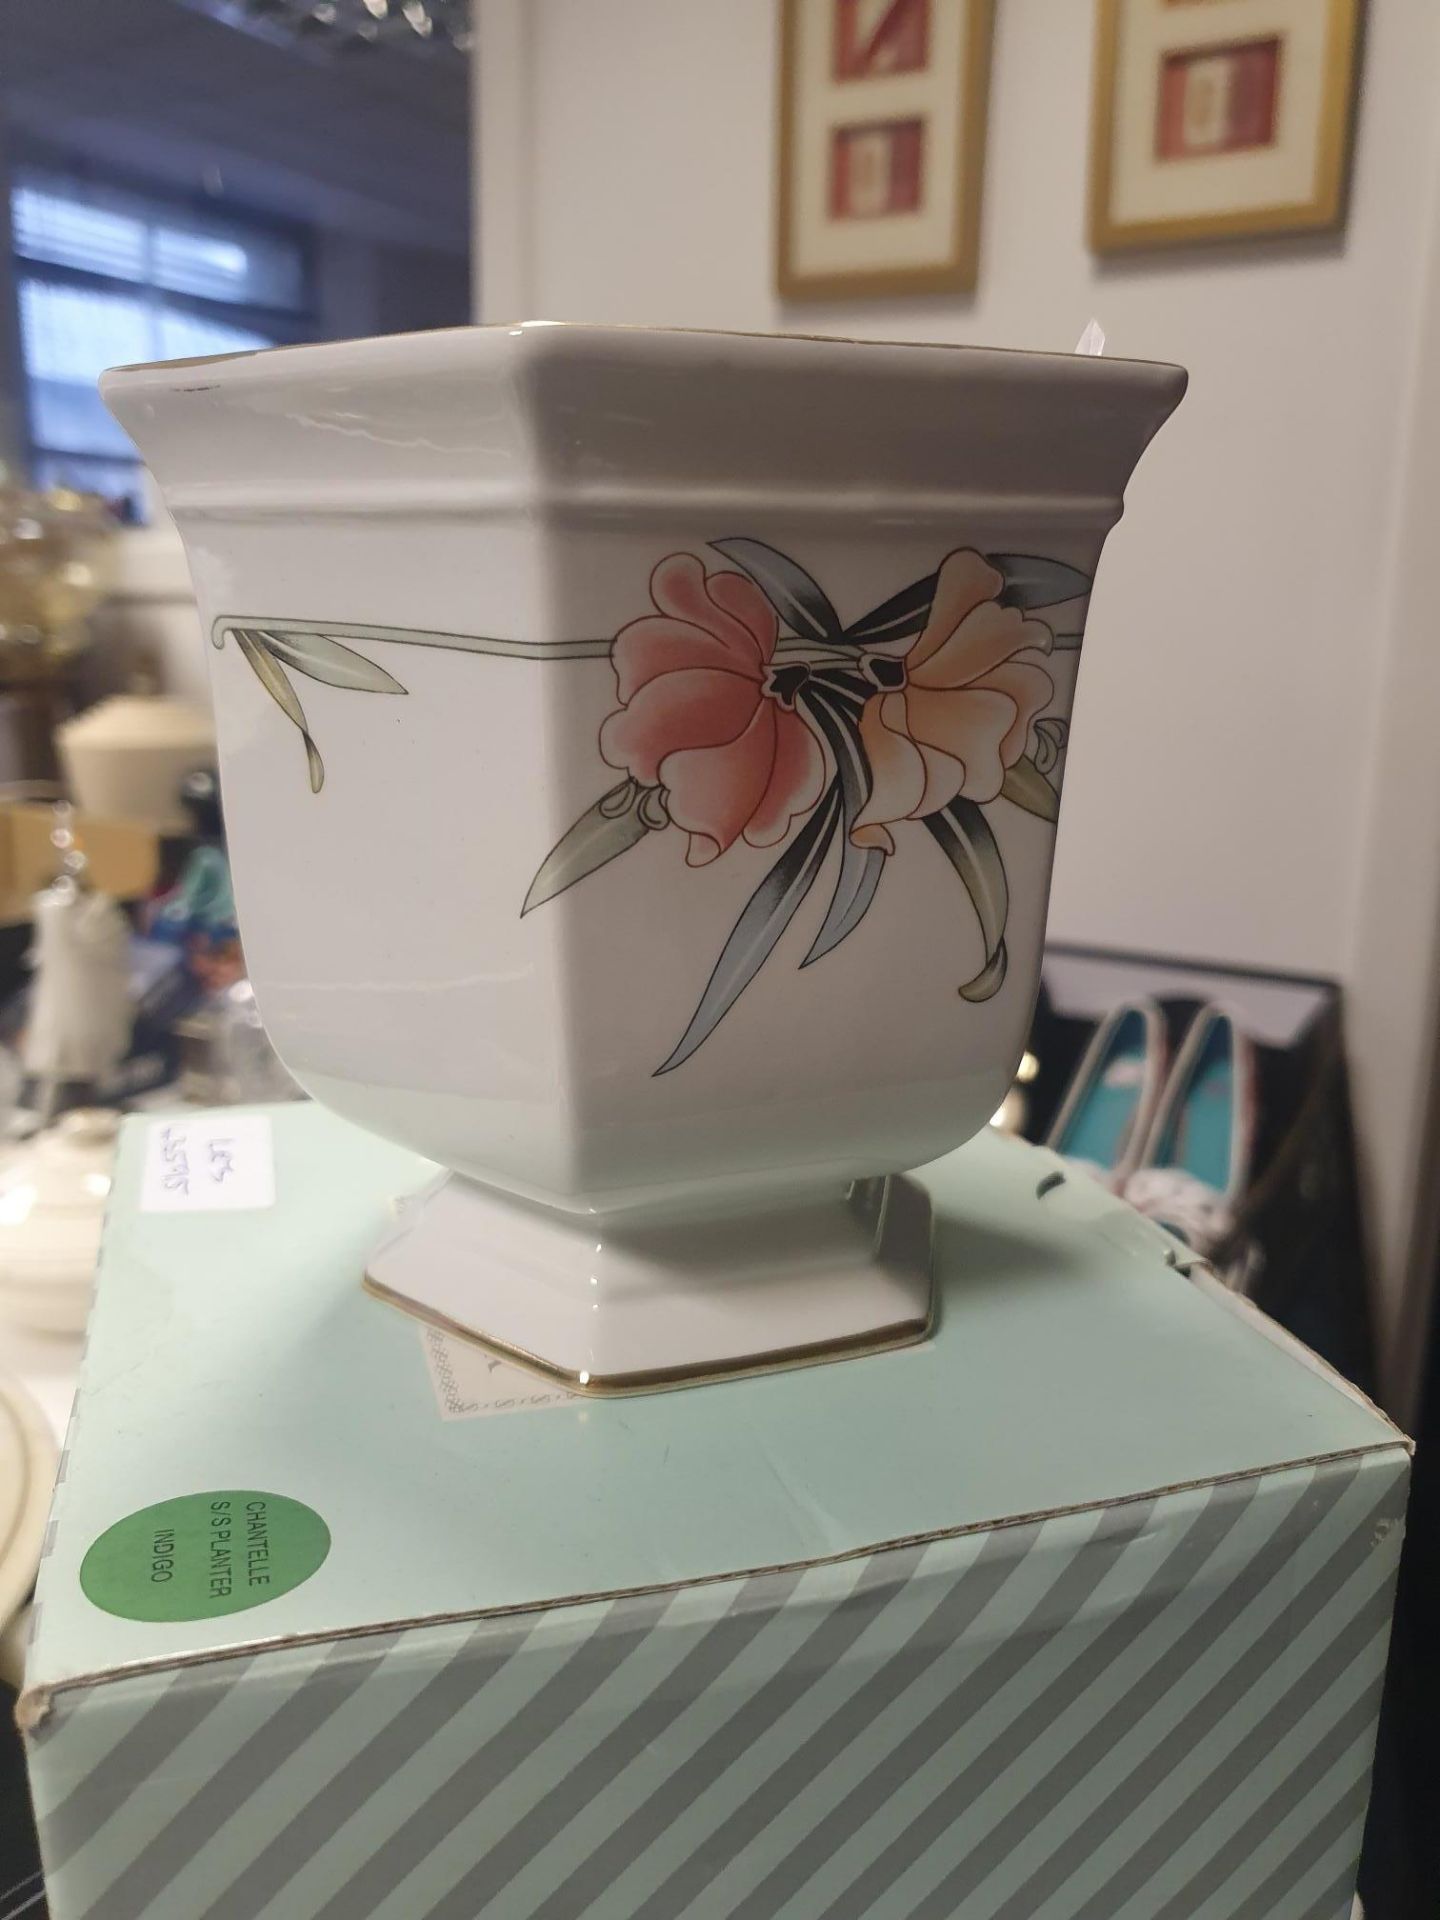 Royal Winton Ceramic planter in box